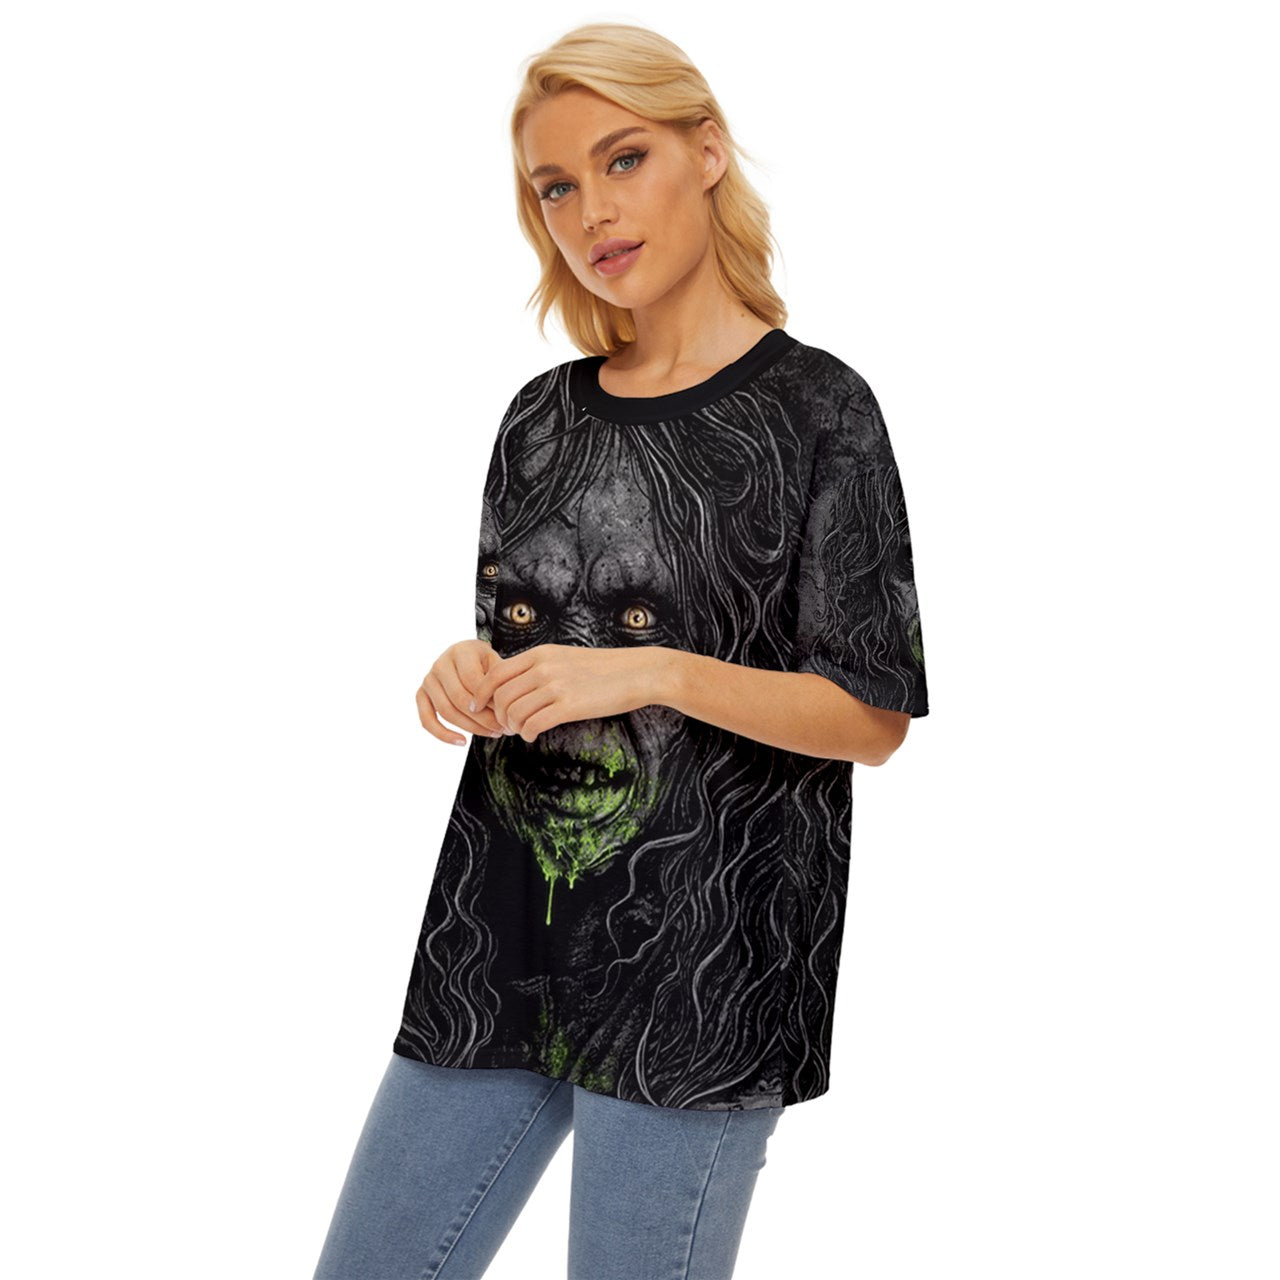 Linda Blair Oversized Basic T-Shirt